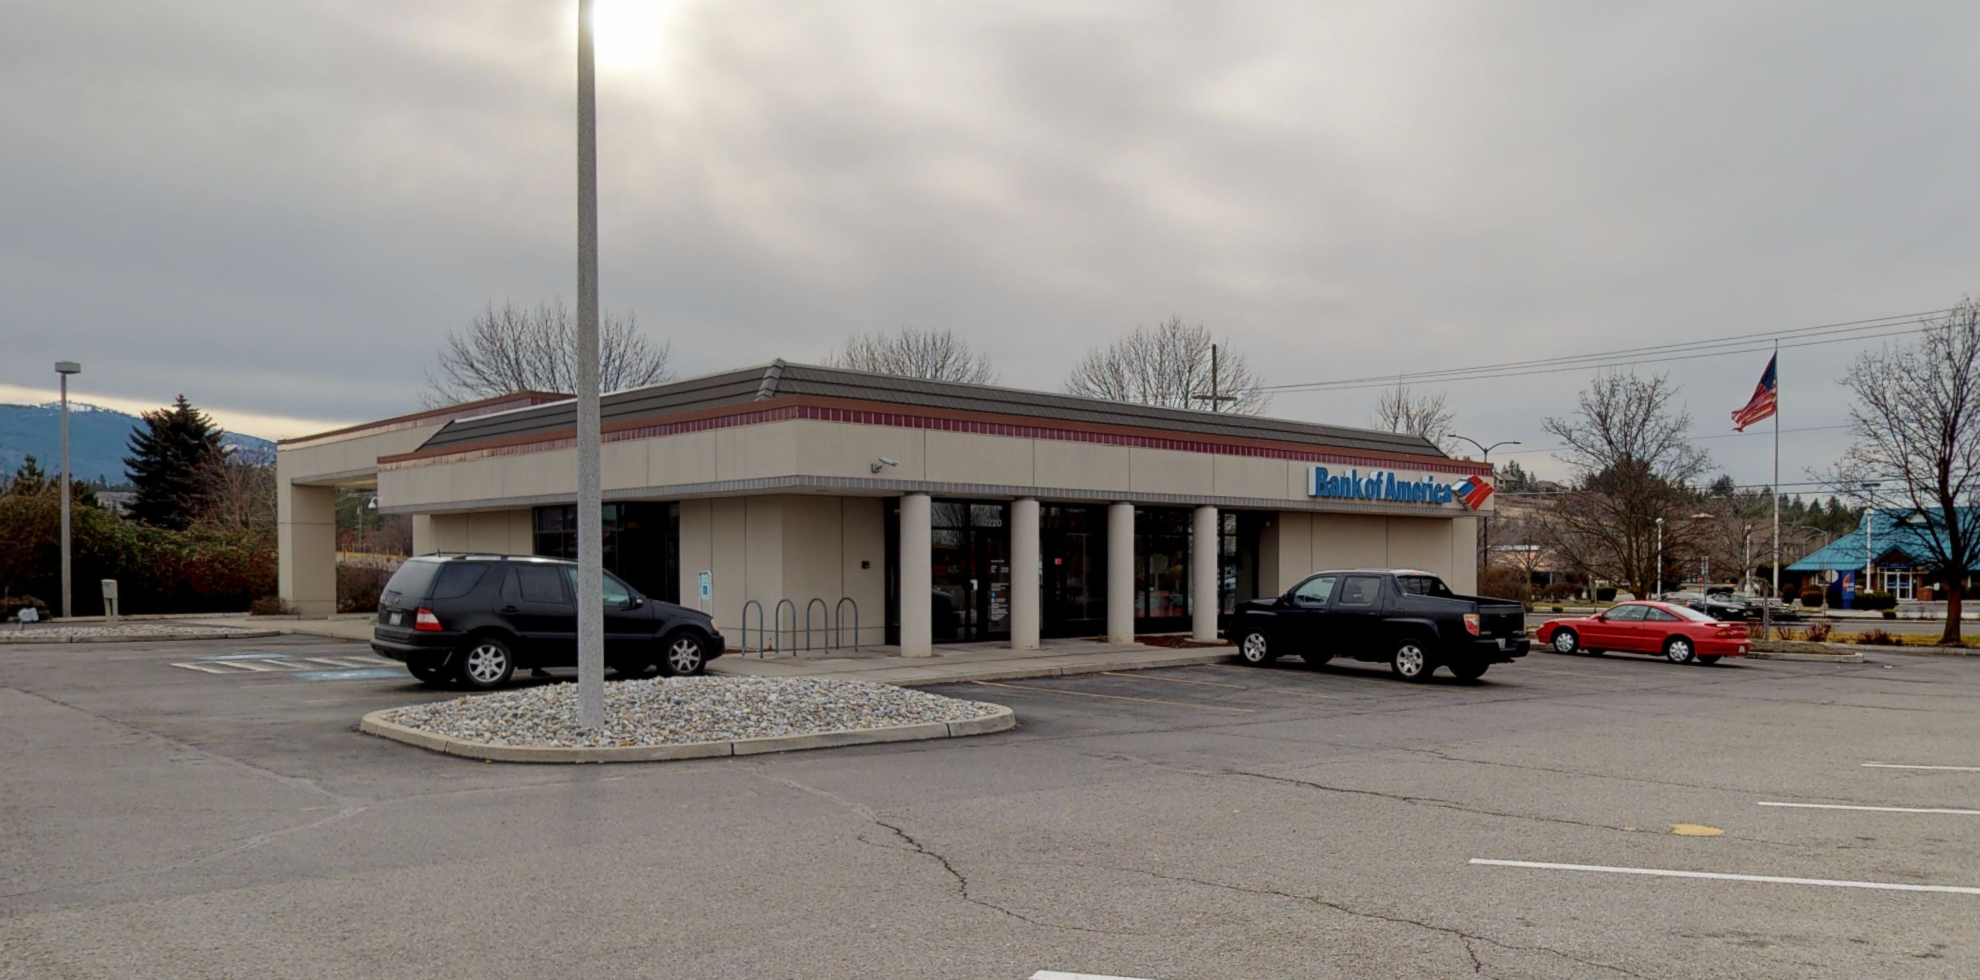 Bank of America financial center with drive-thru ATM | 1220 N Liberty Lake Rd, Liberty Lake, WA 99019